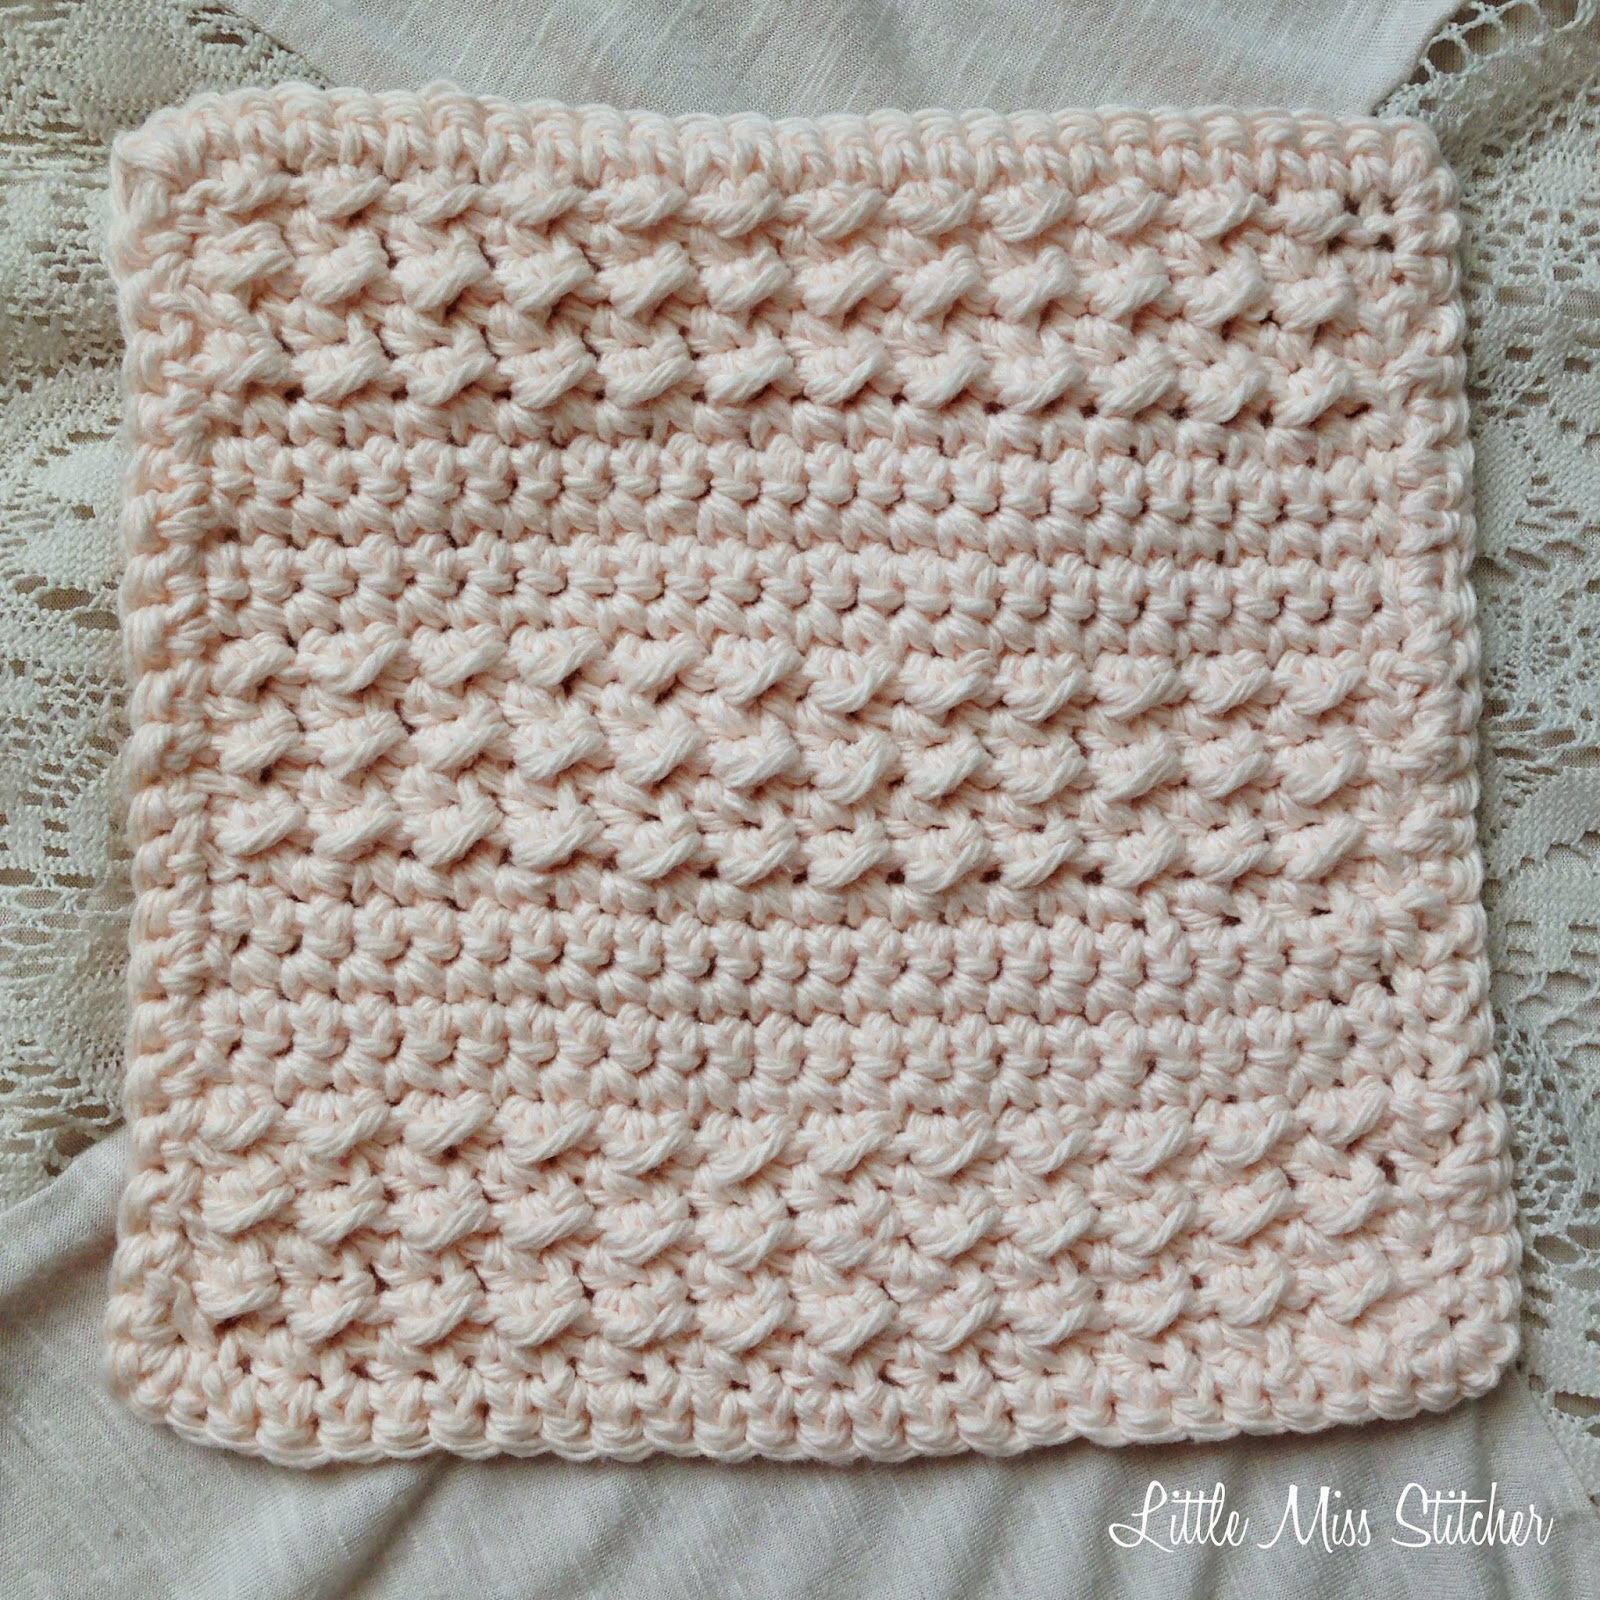 Crochet Dishcloth Free Pattern Little Miss Stitcher 5 Free Crochet Dishcloth Patterns